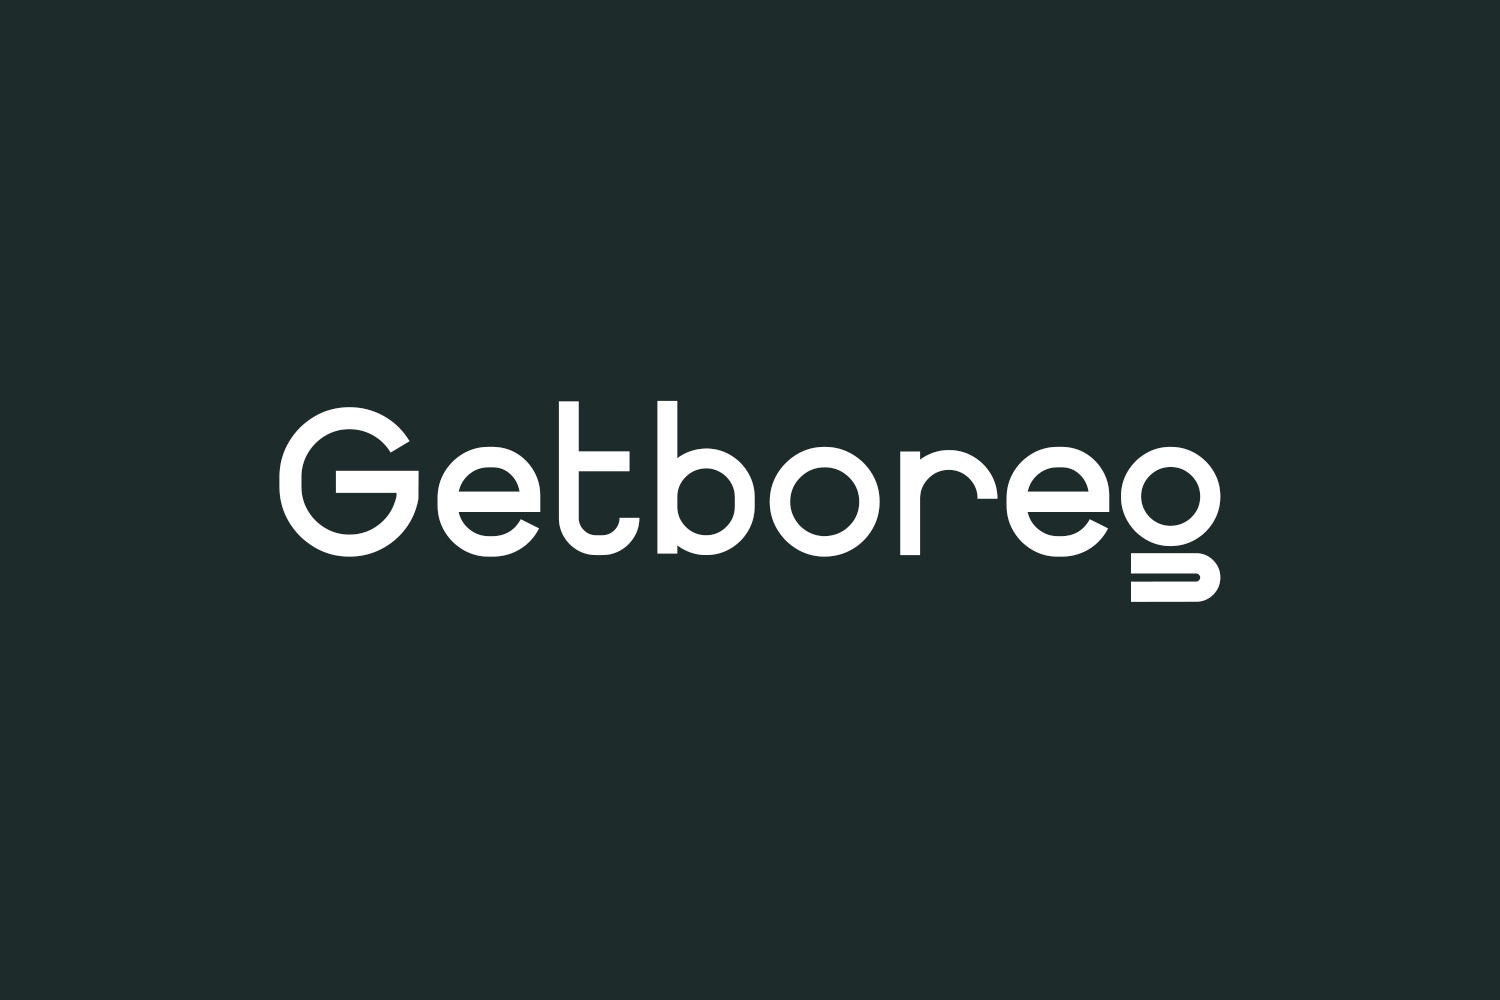 Getboreg Free Font